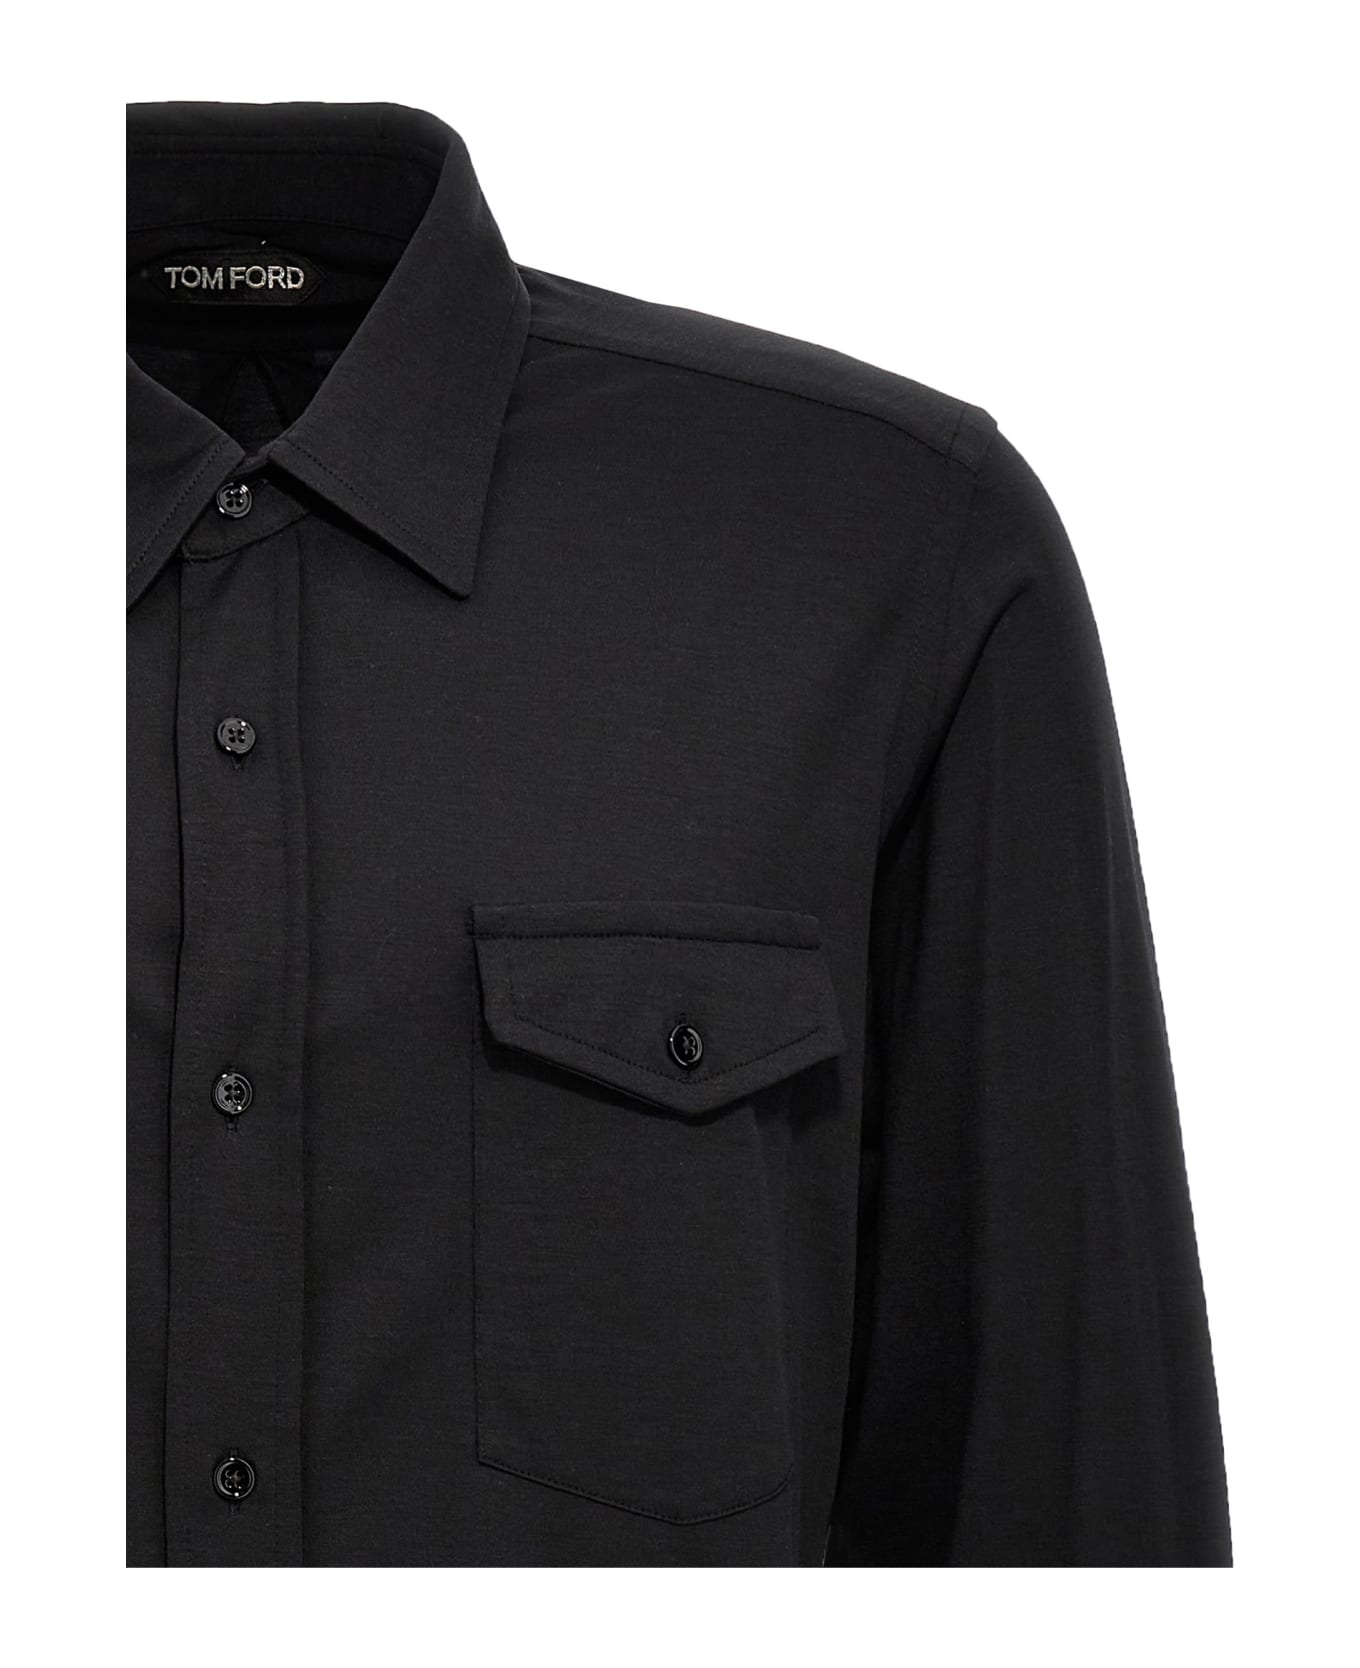 Tom Ford Silk Blend Shirt - Black  